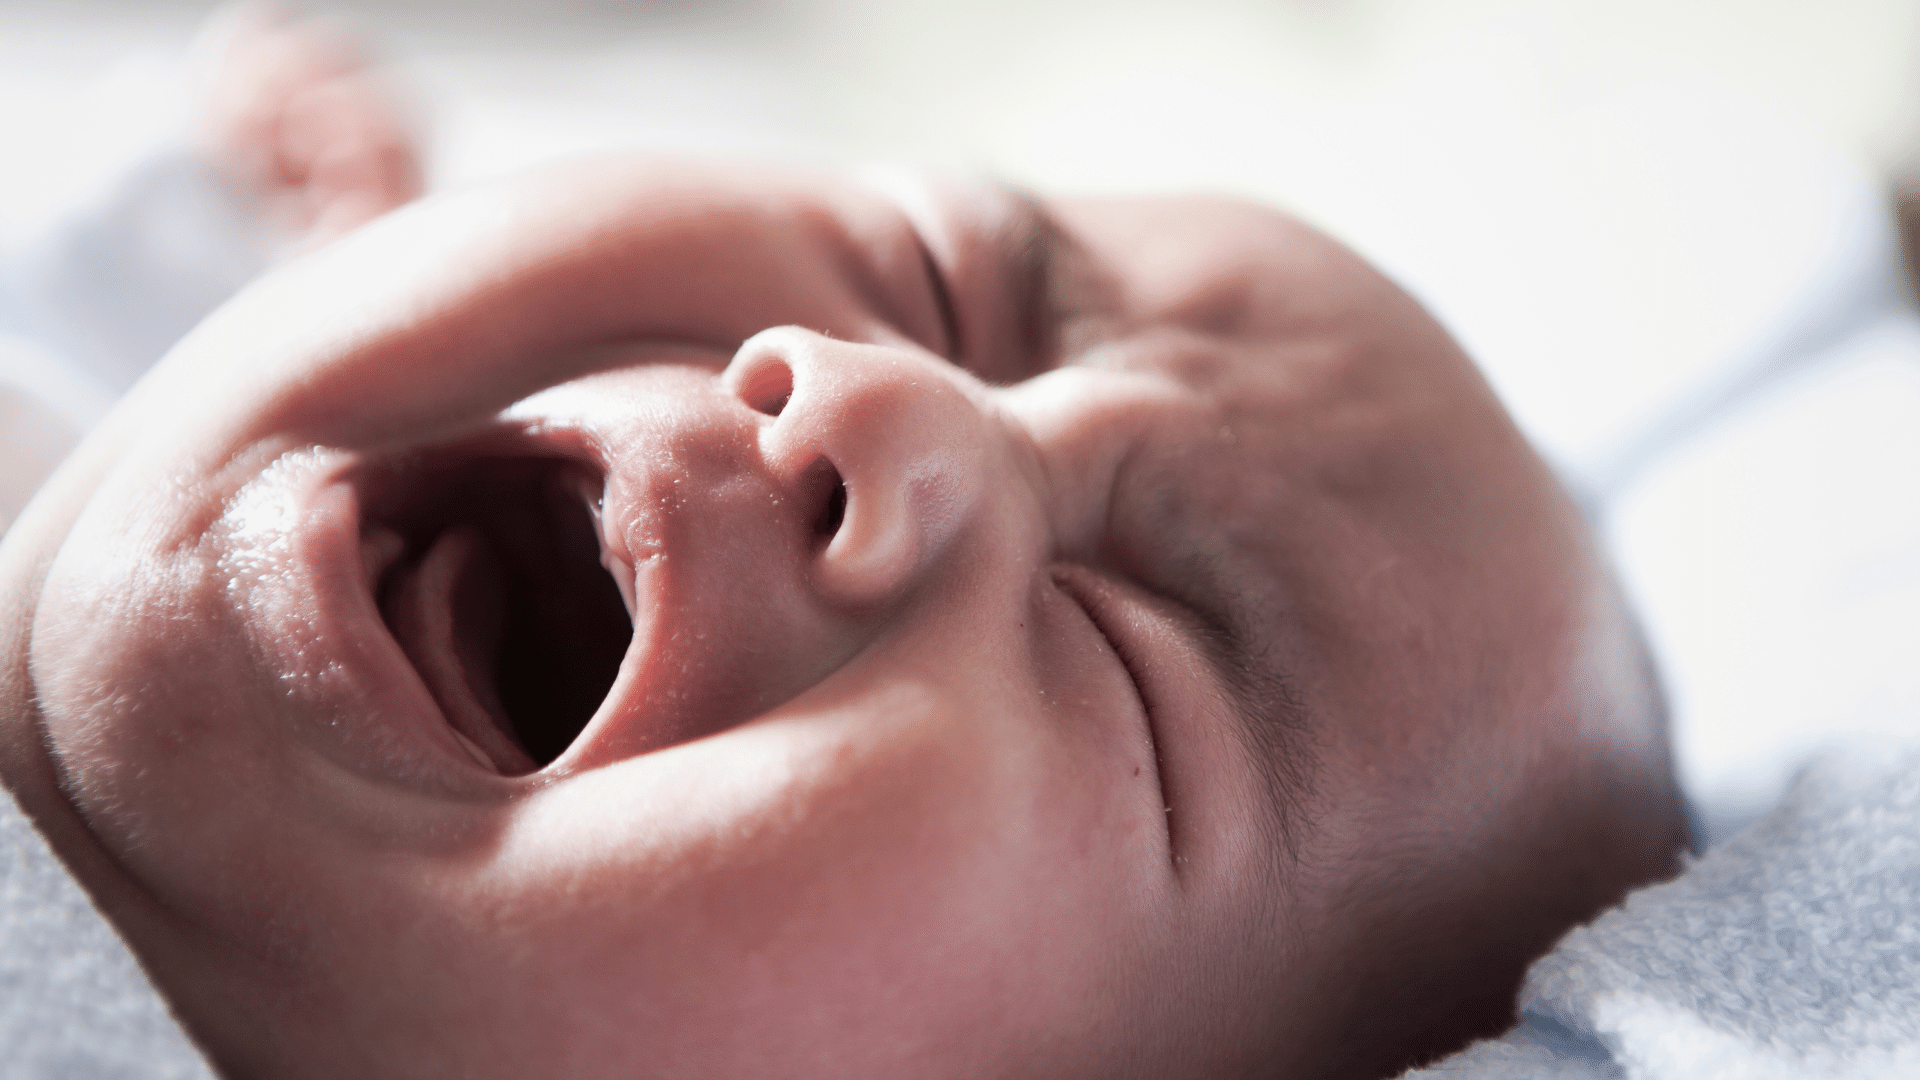 Infant Cries While Nursing